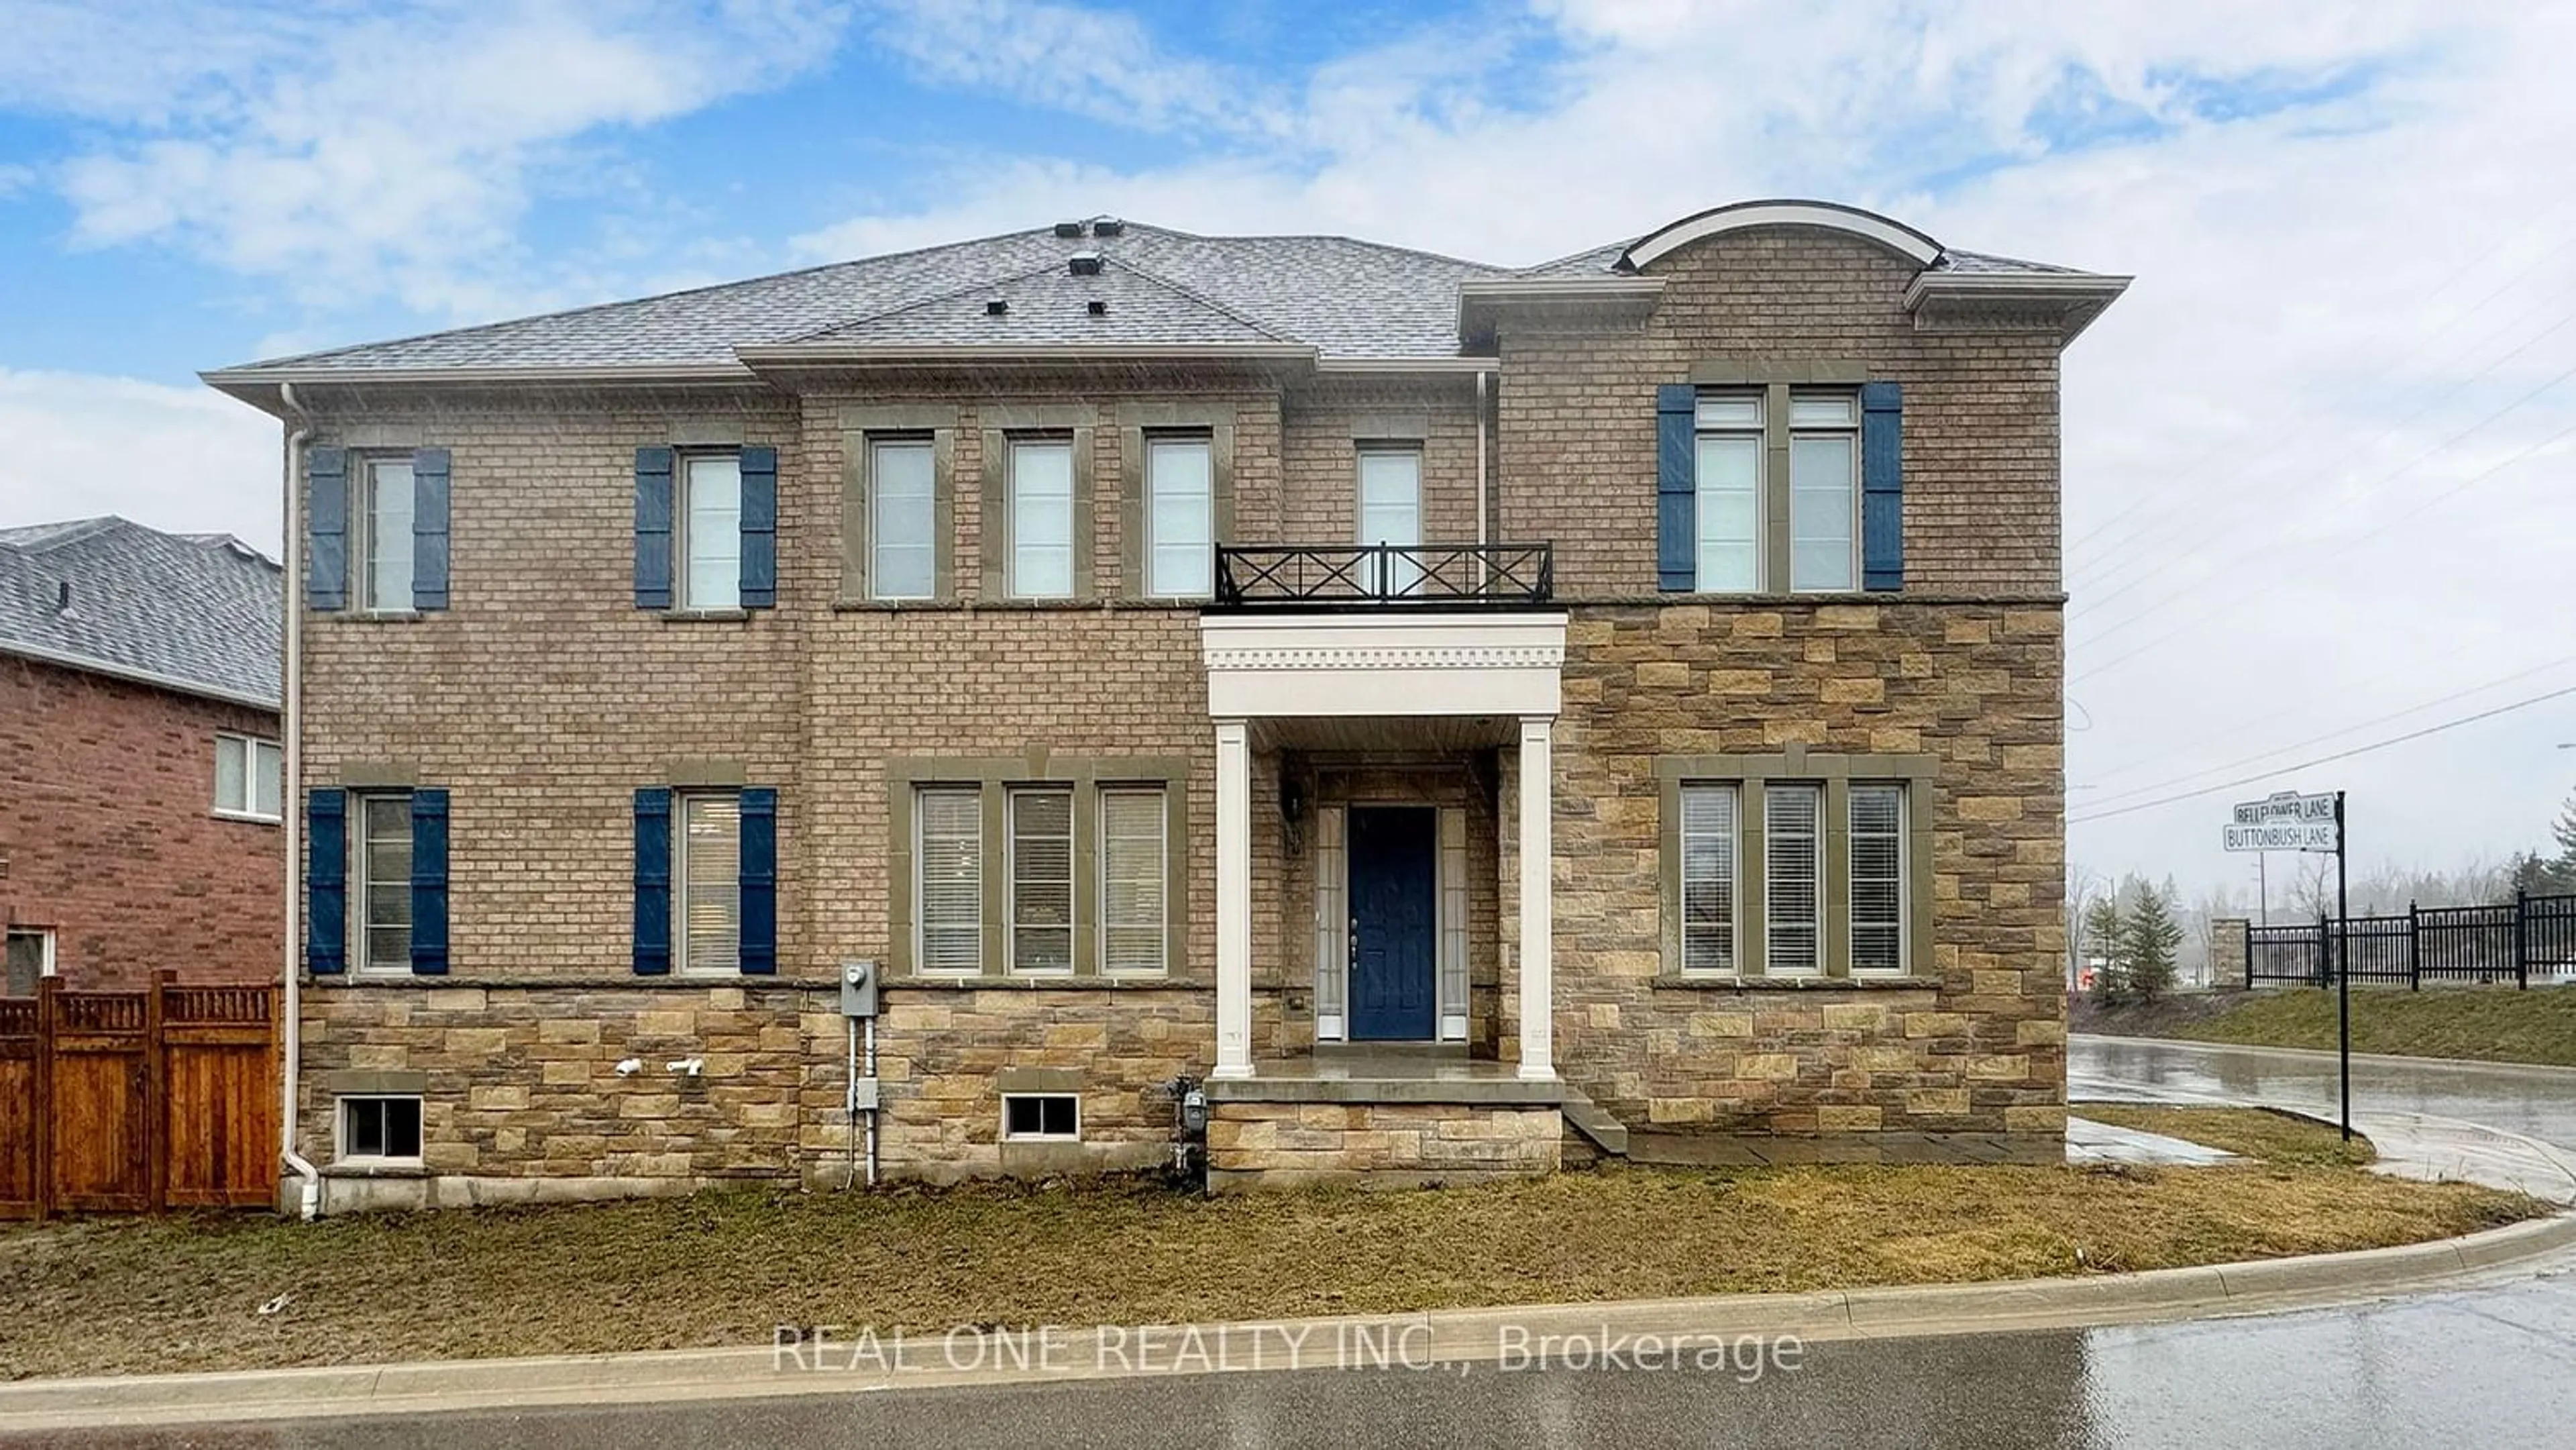 Home with brick exterior material for 33 Bellflower Lane, Richmond Hill Ontario L4E 1E7